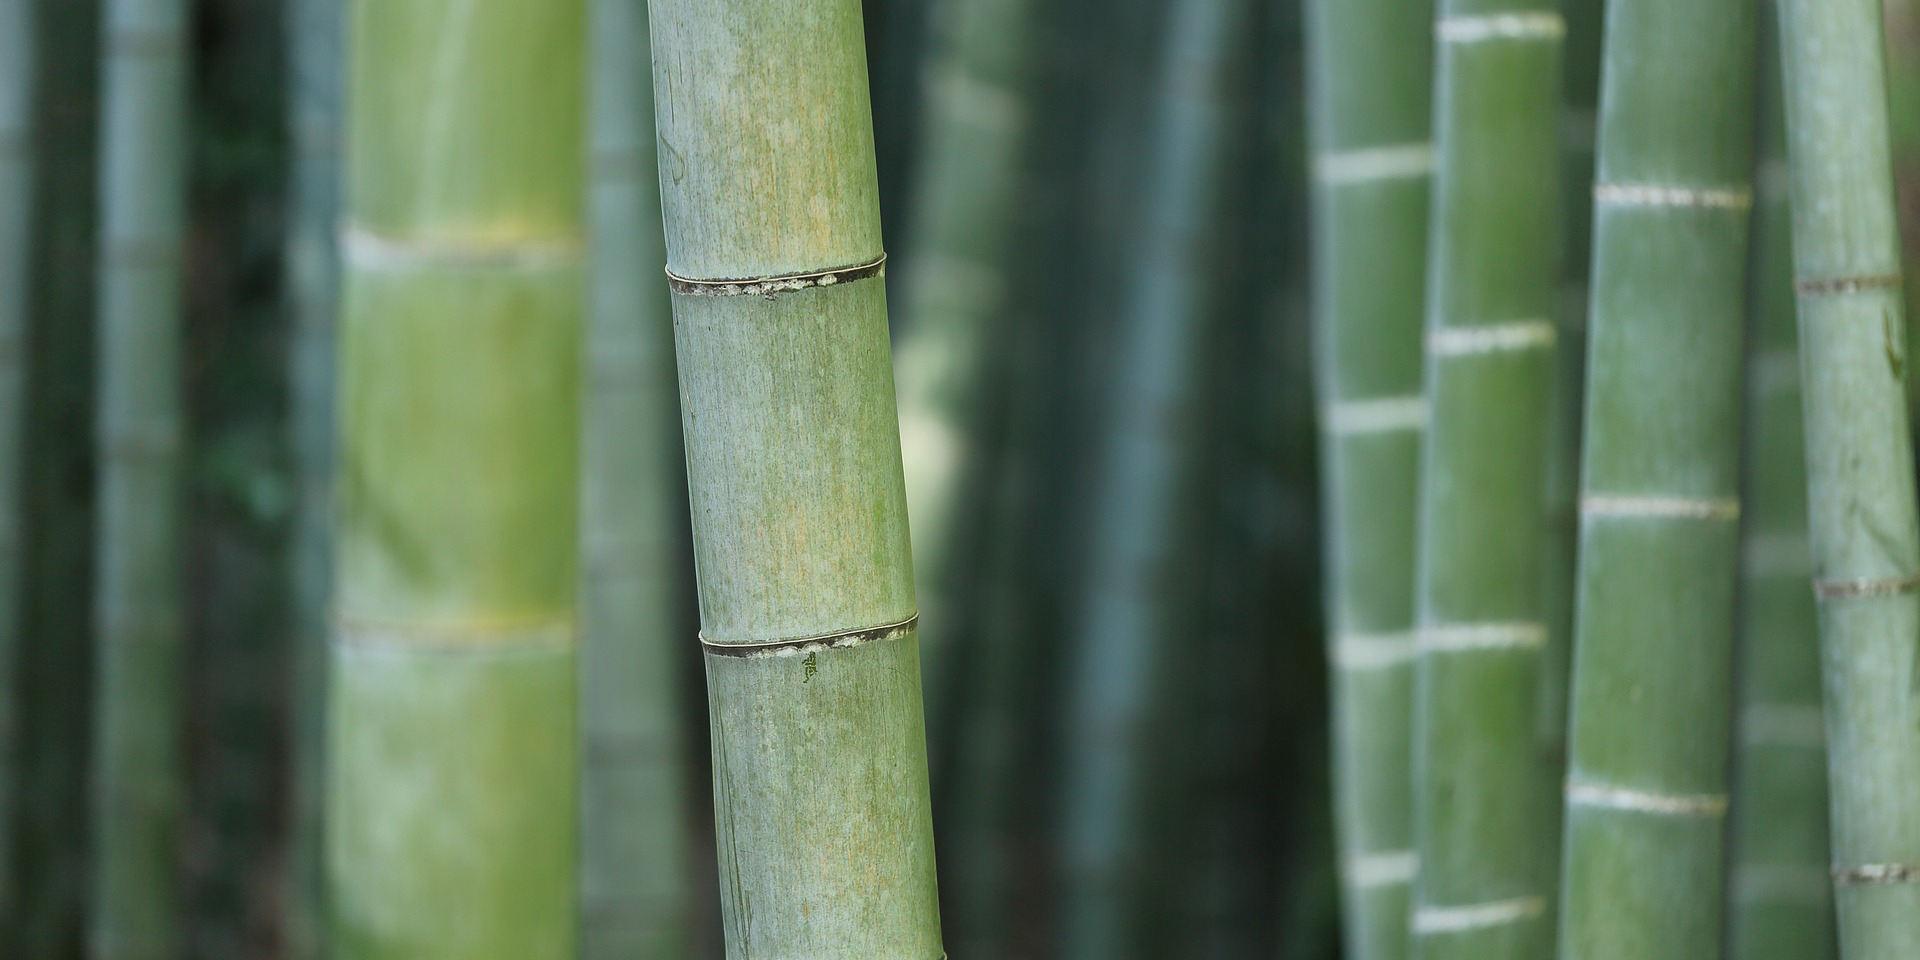 cane bamboo flooring